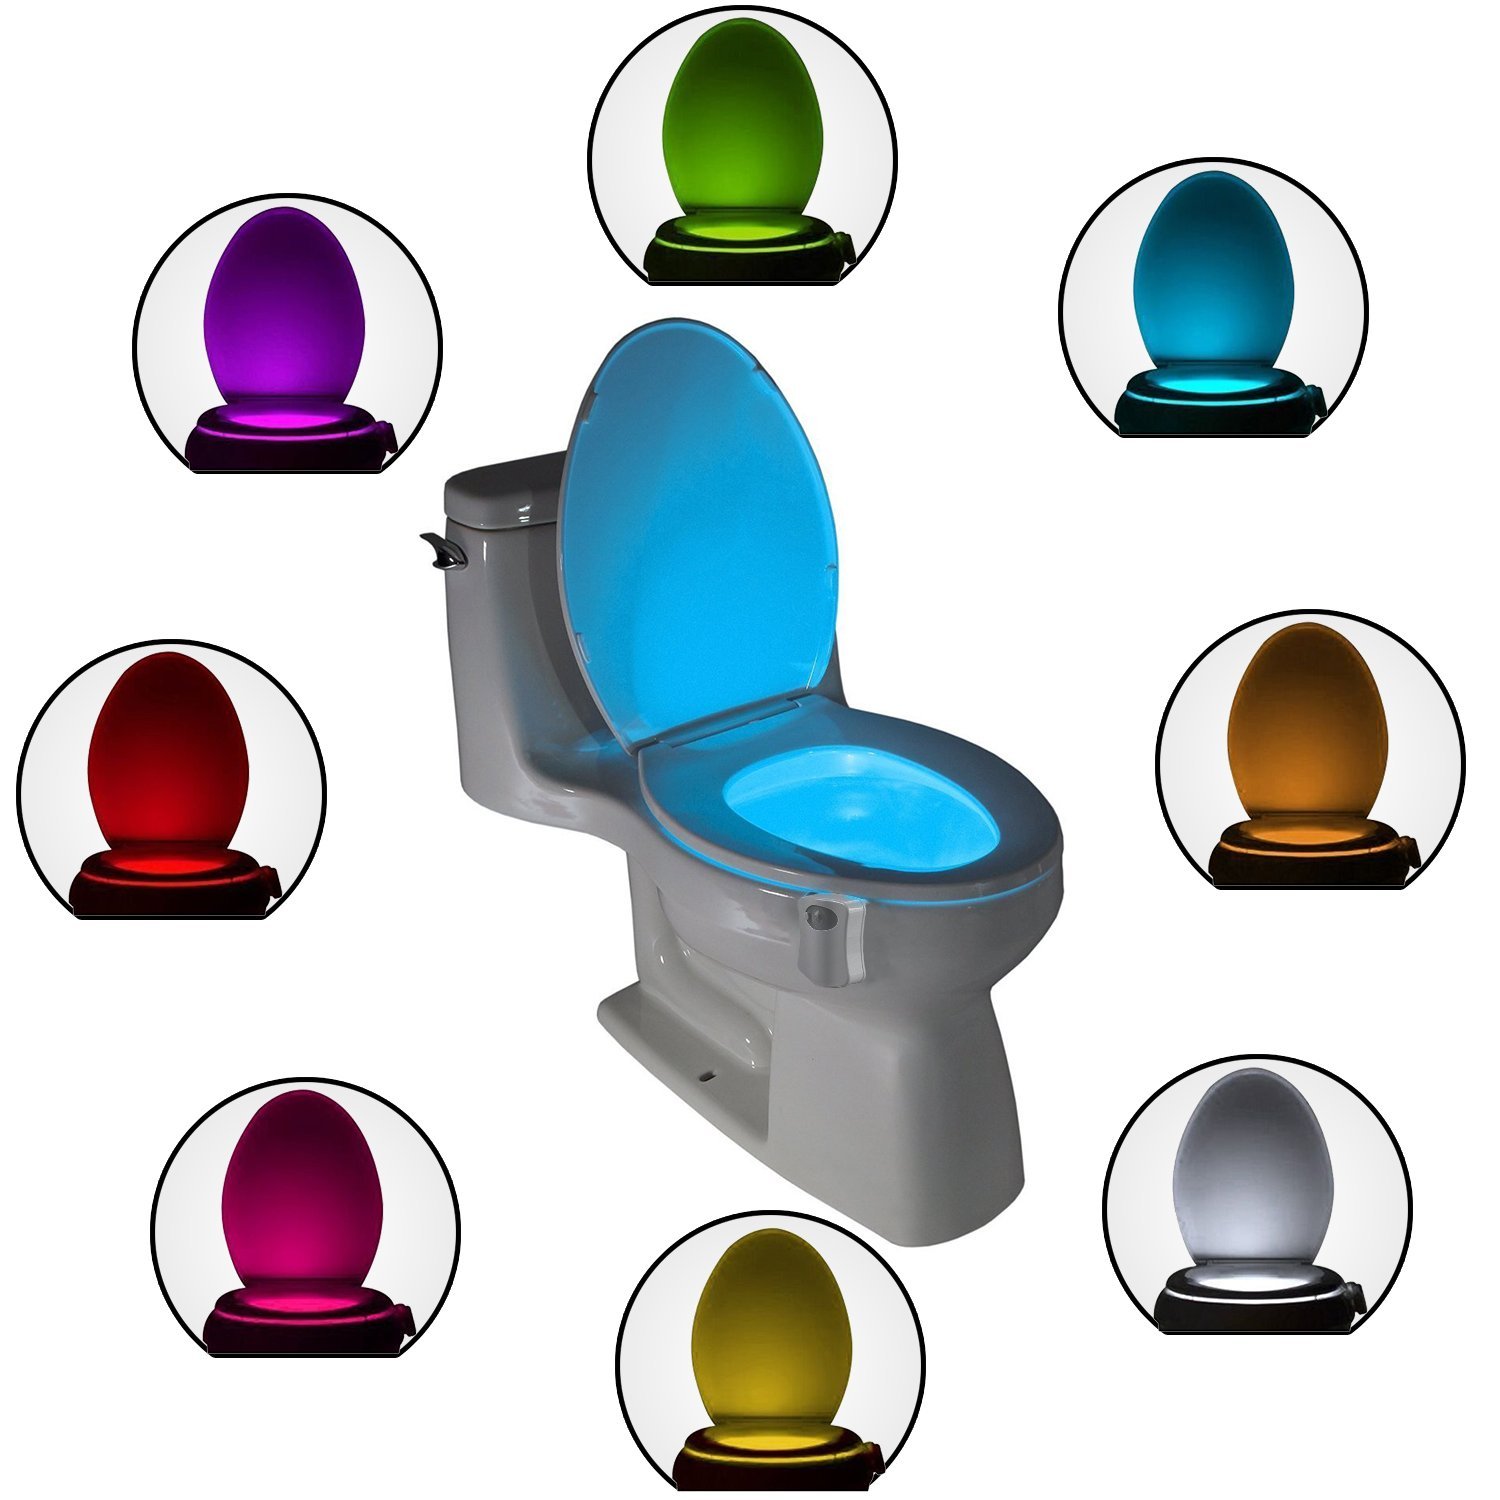 the-original-toilet-bowl